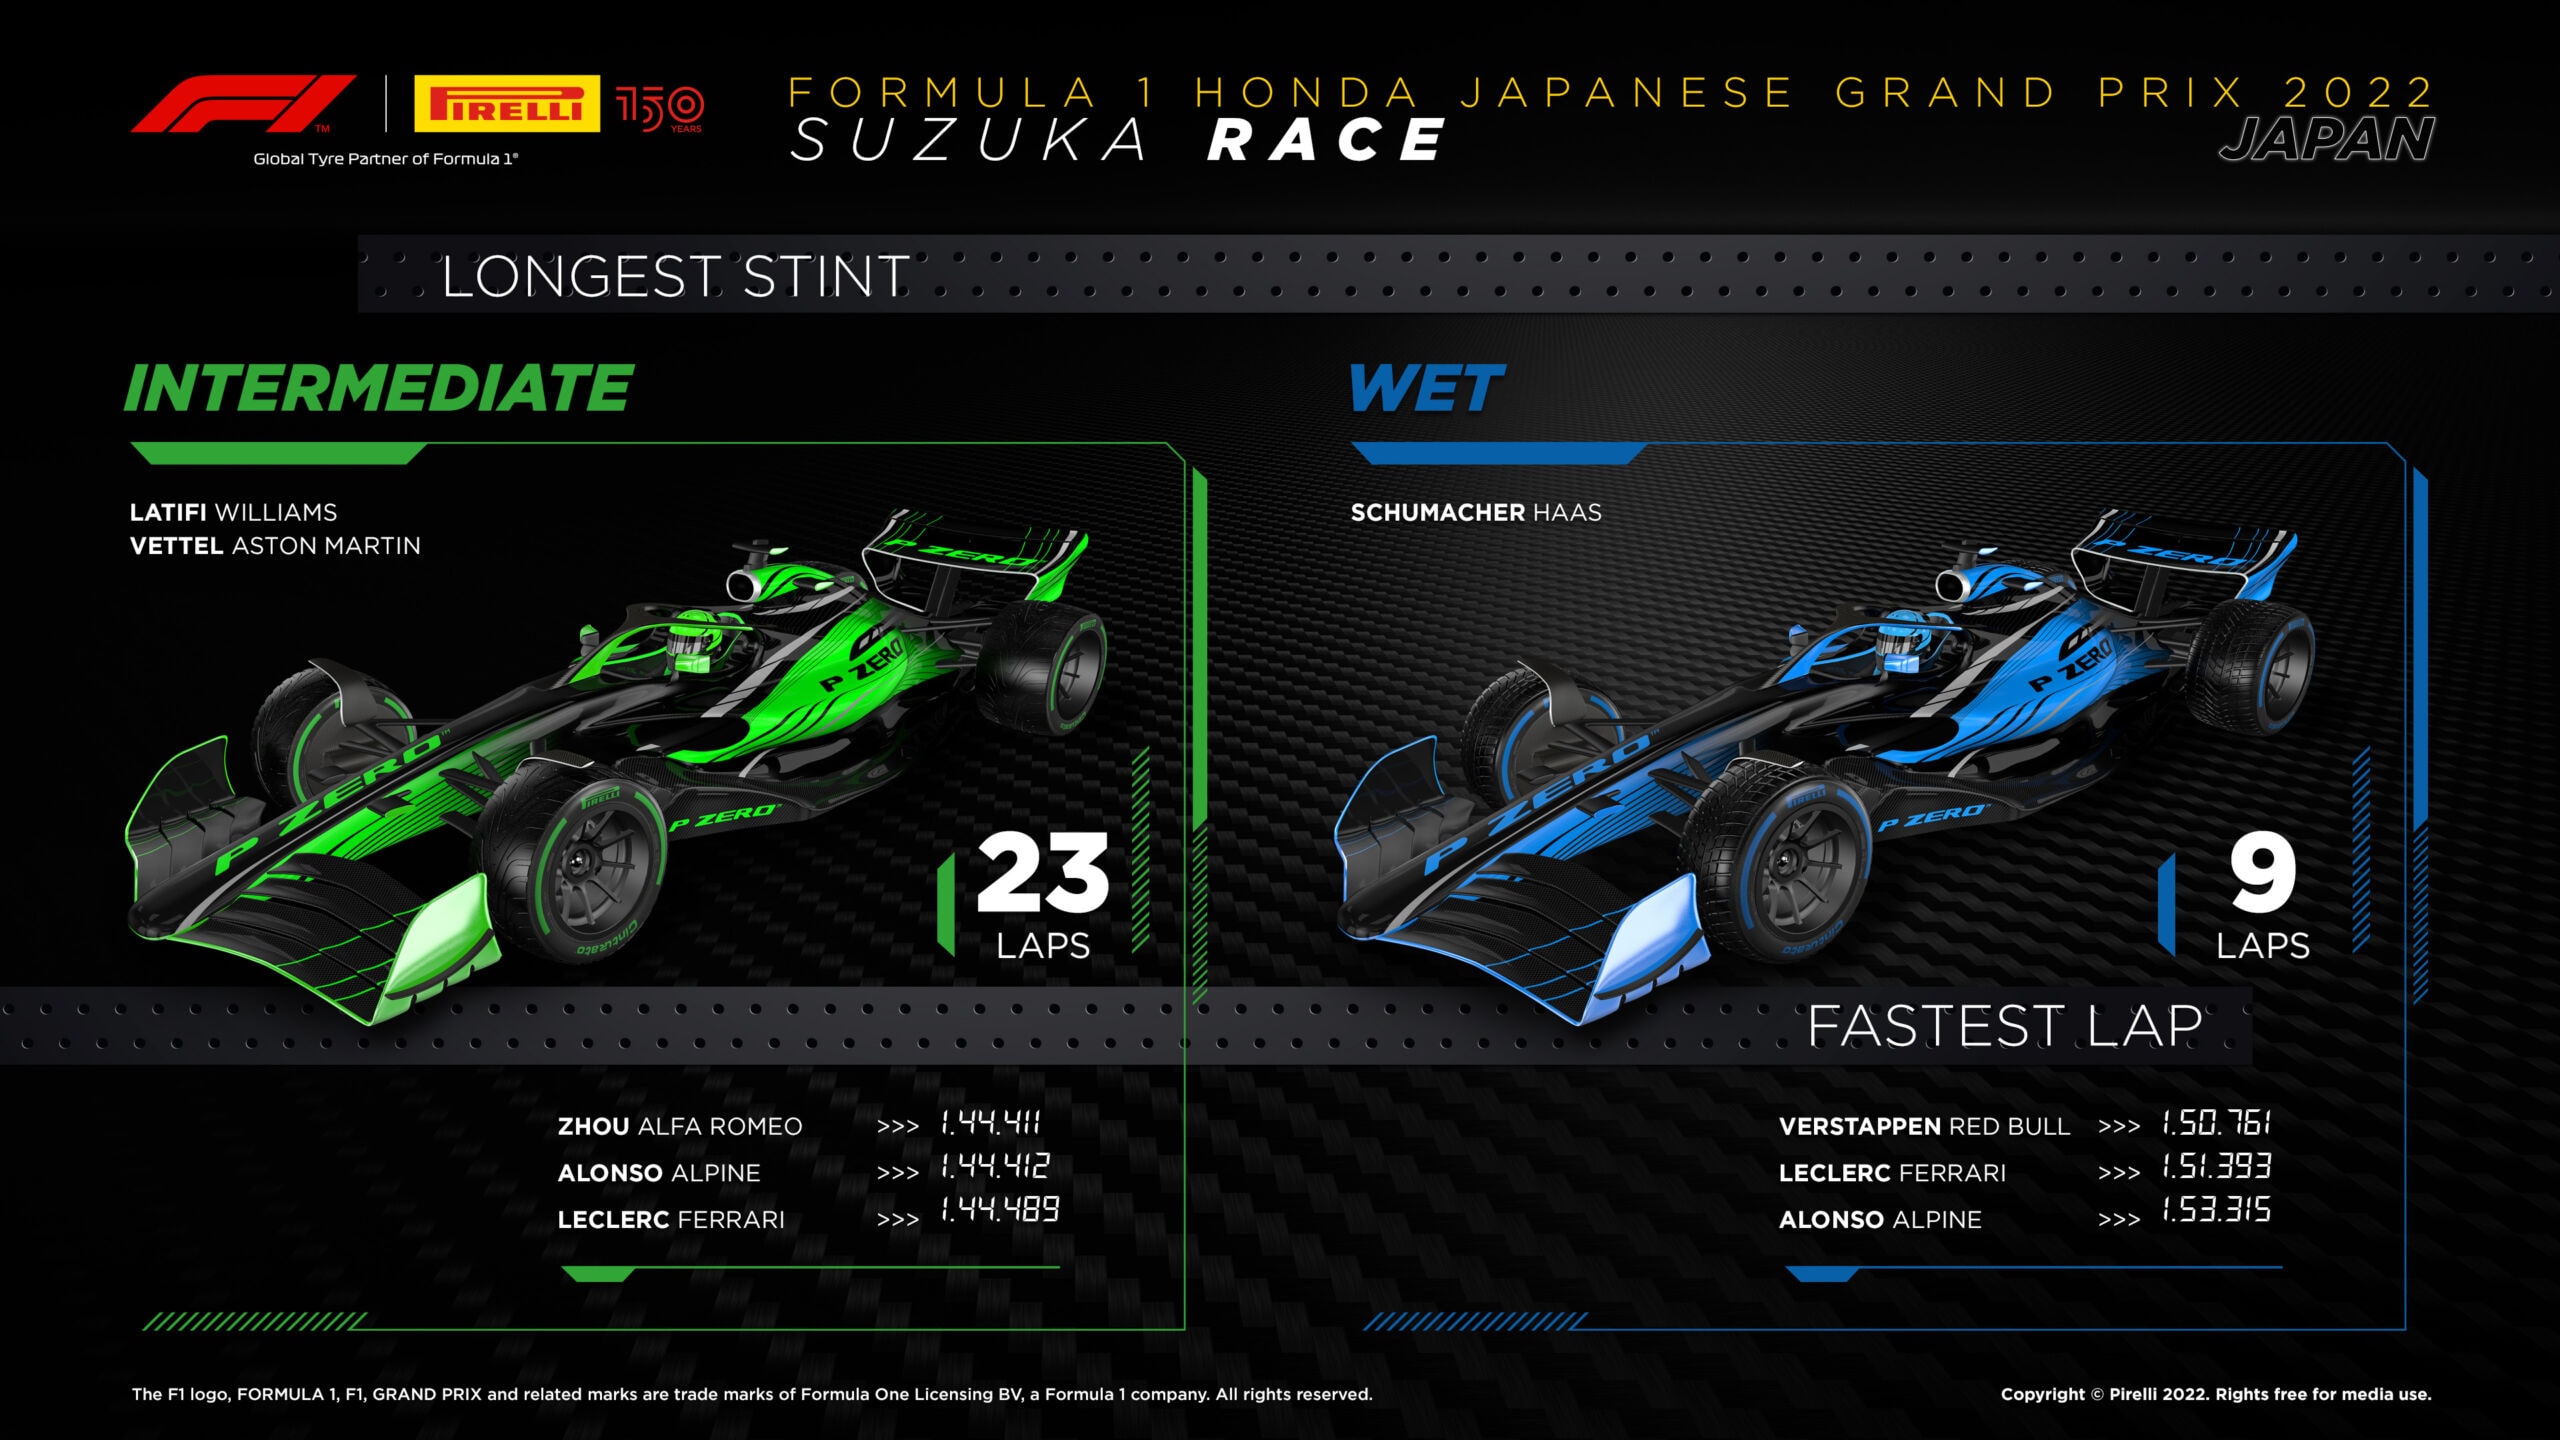 2022 Japanese Grand Prix Tyre Performance Analysis - Longest Stint
